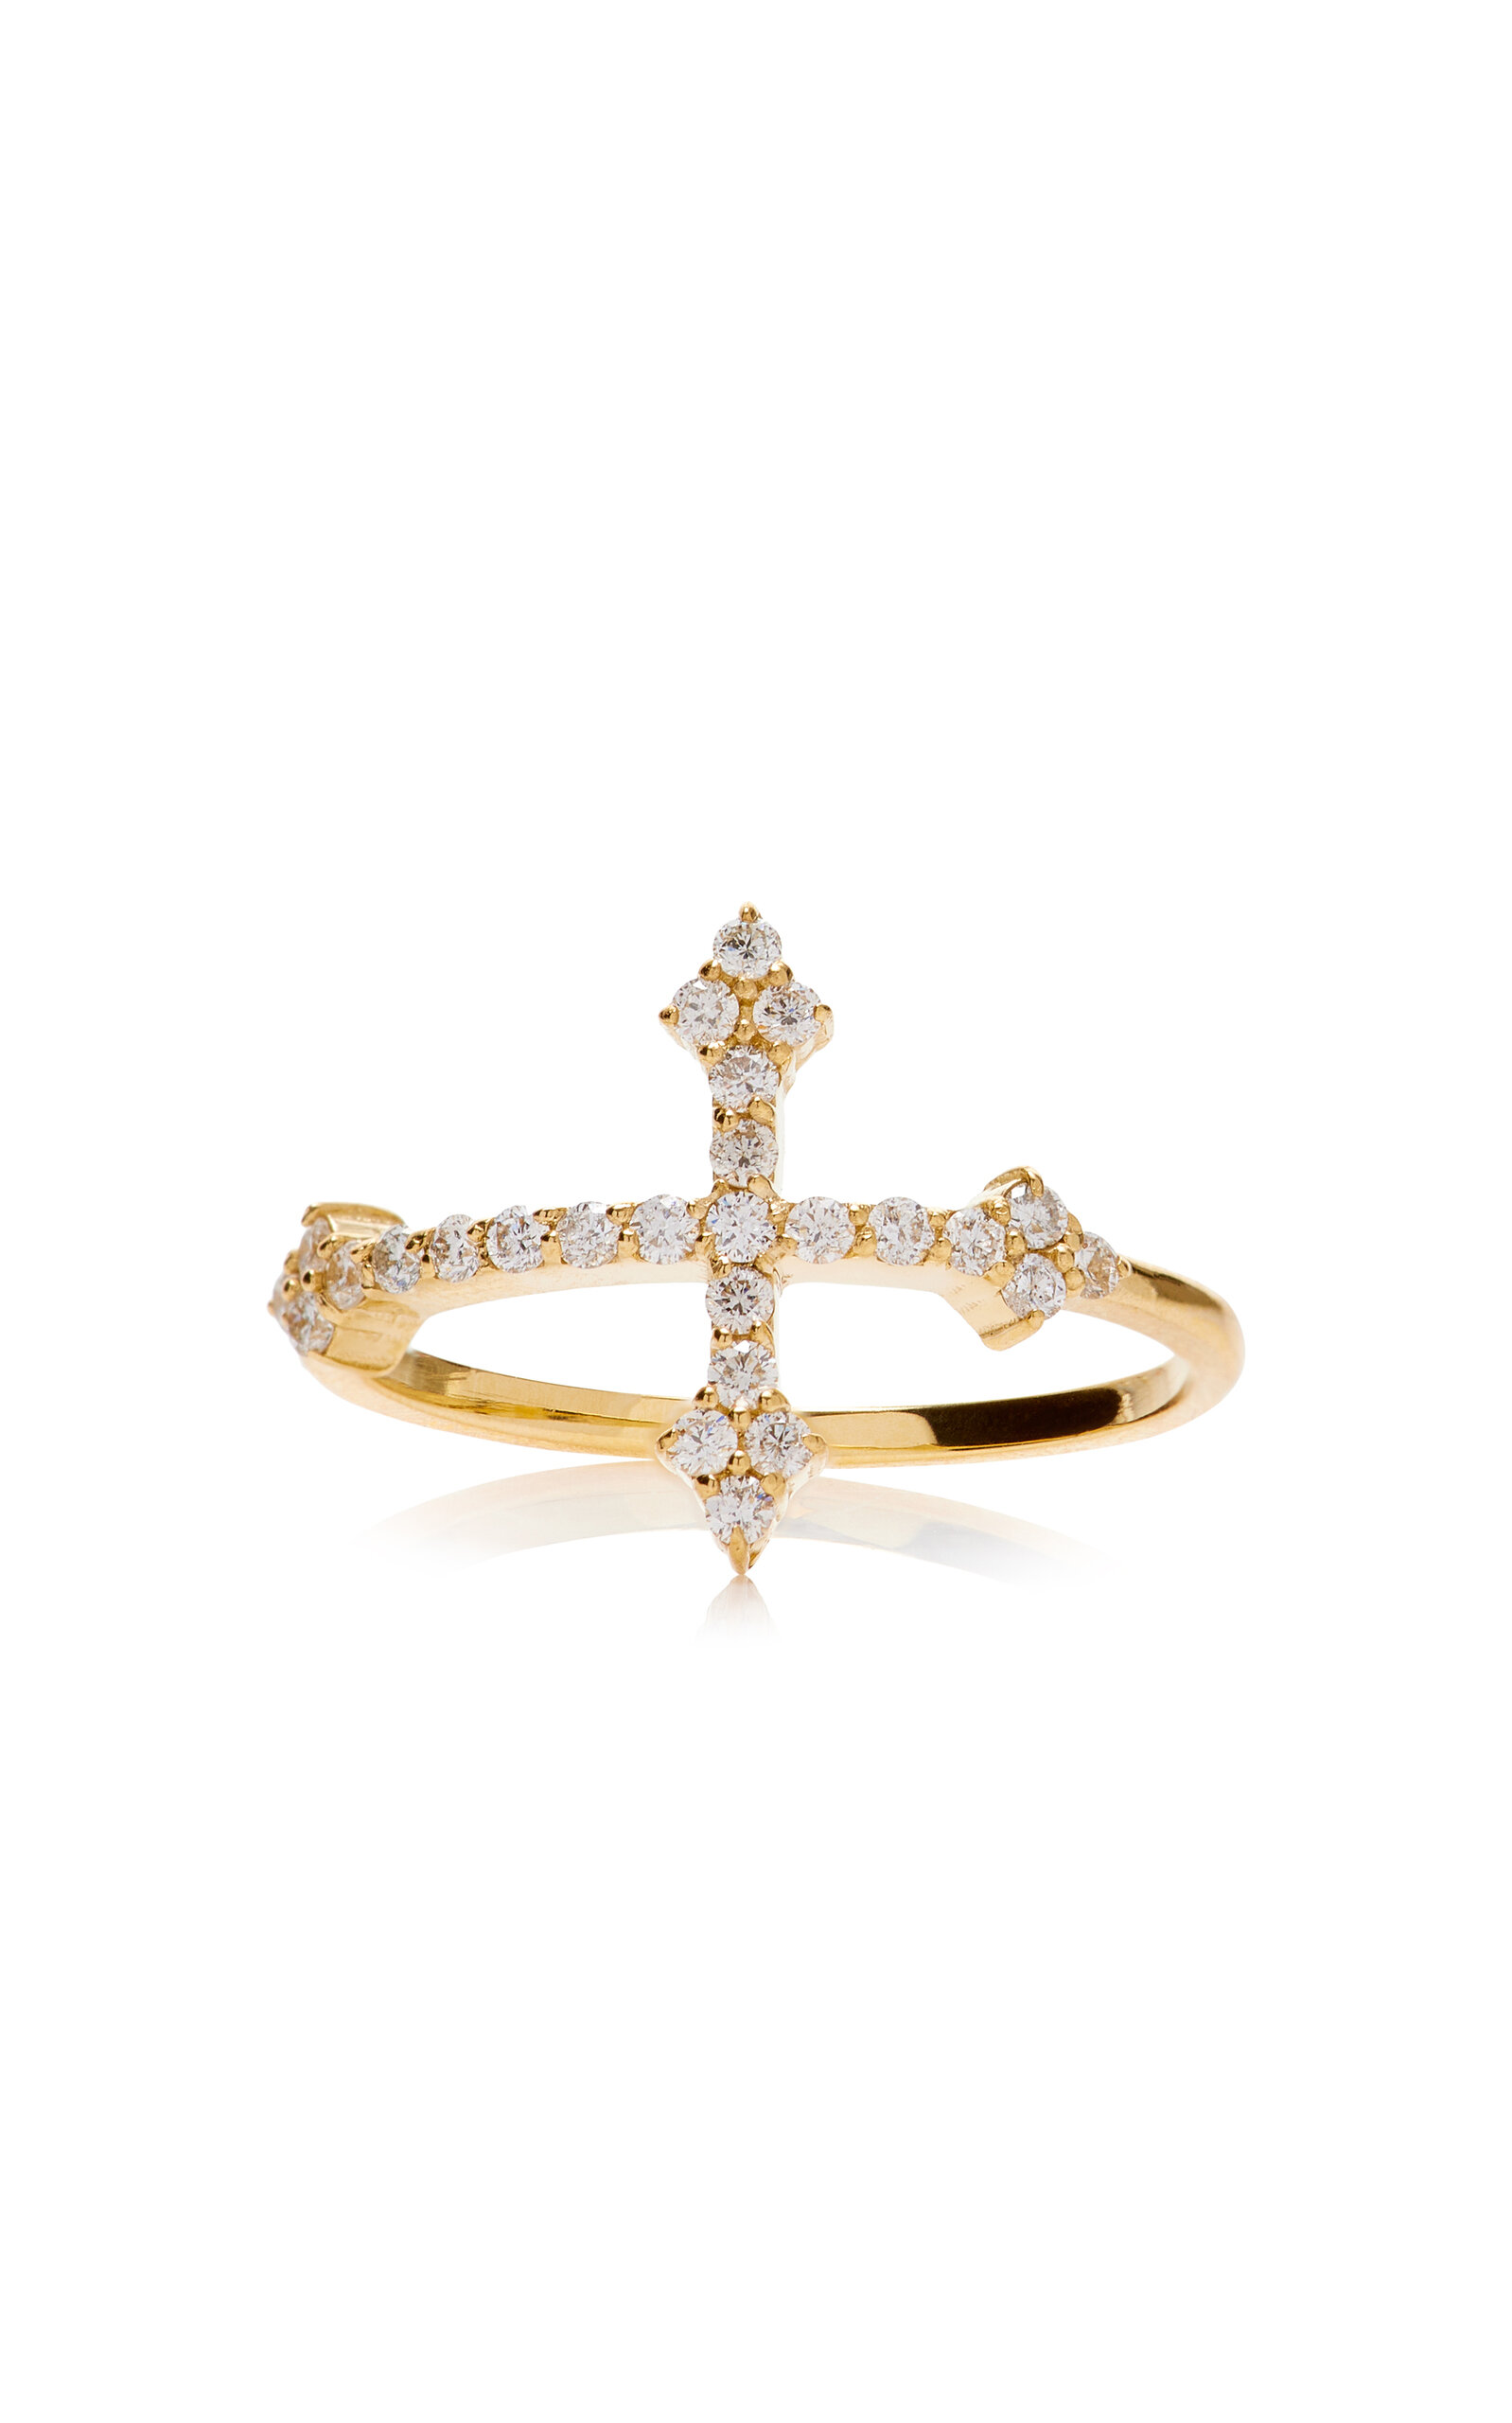 Dru Women's Cross Your Fingers 14k Yellow Gold Diamond Ring